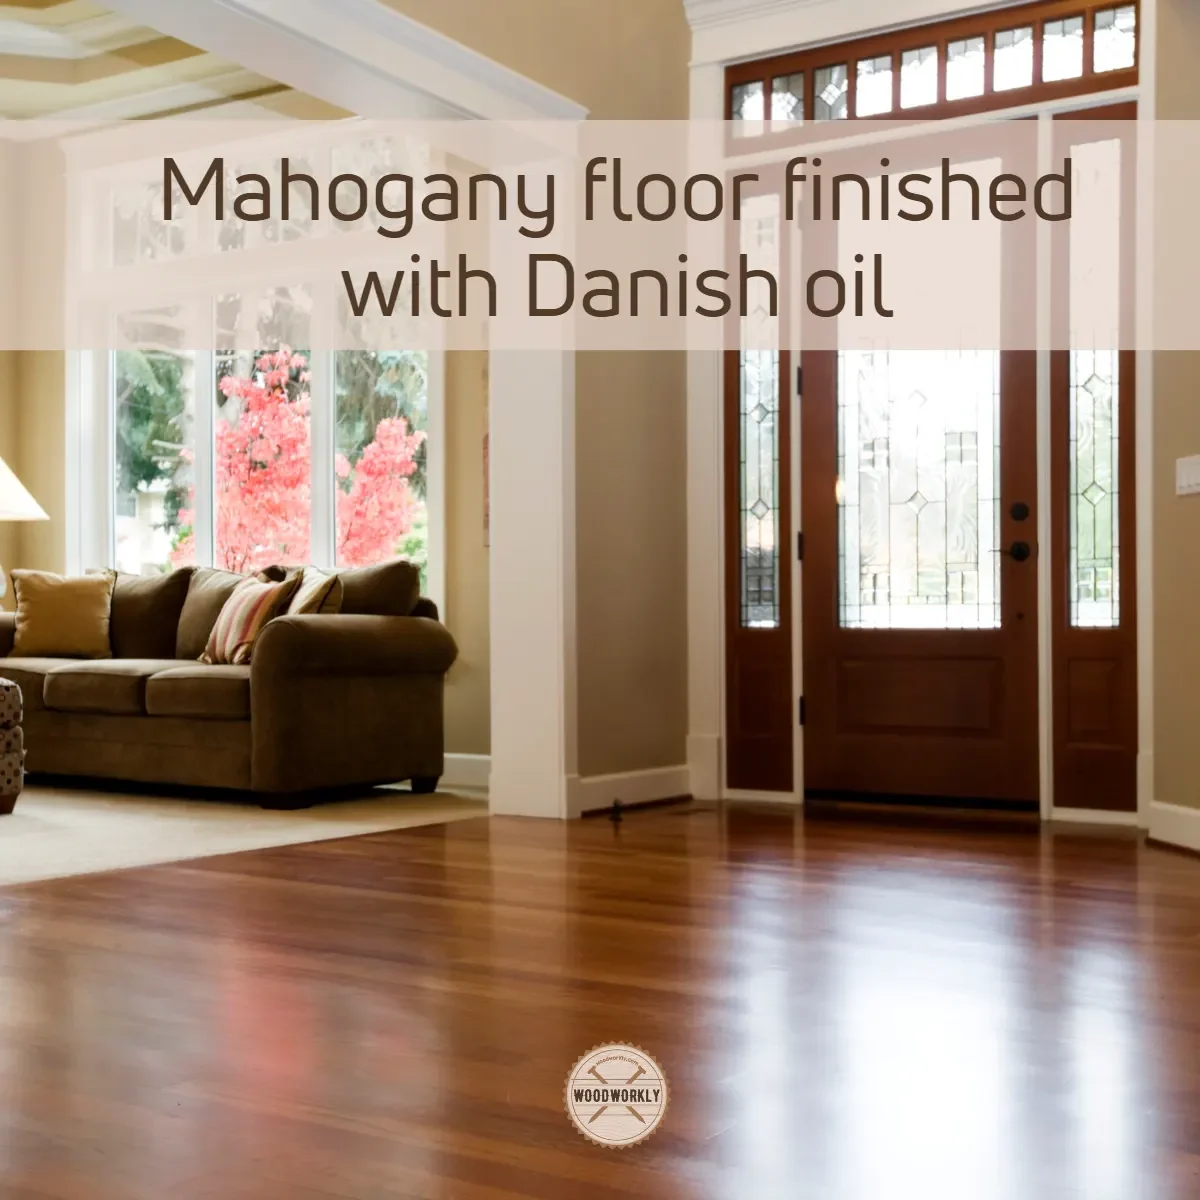 Mahogany flooring finished with Danish oil